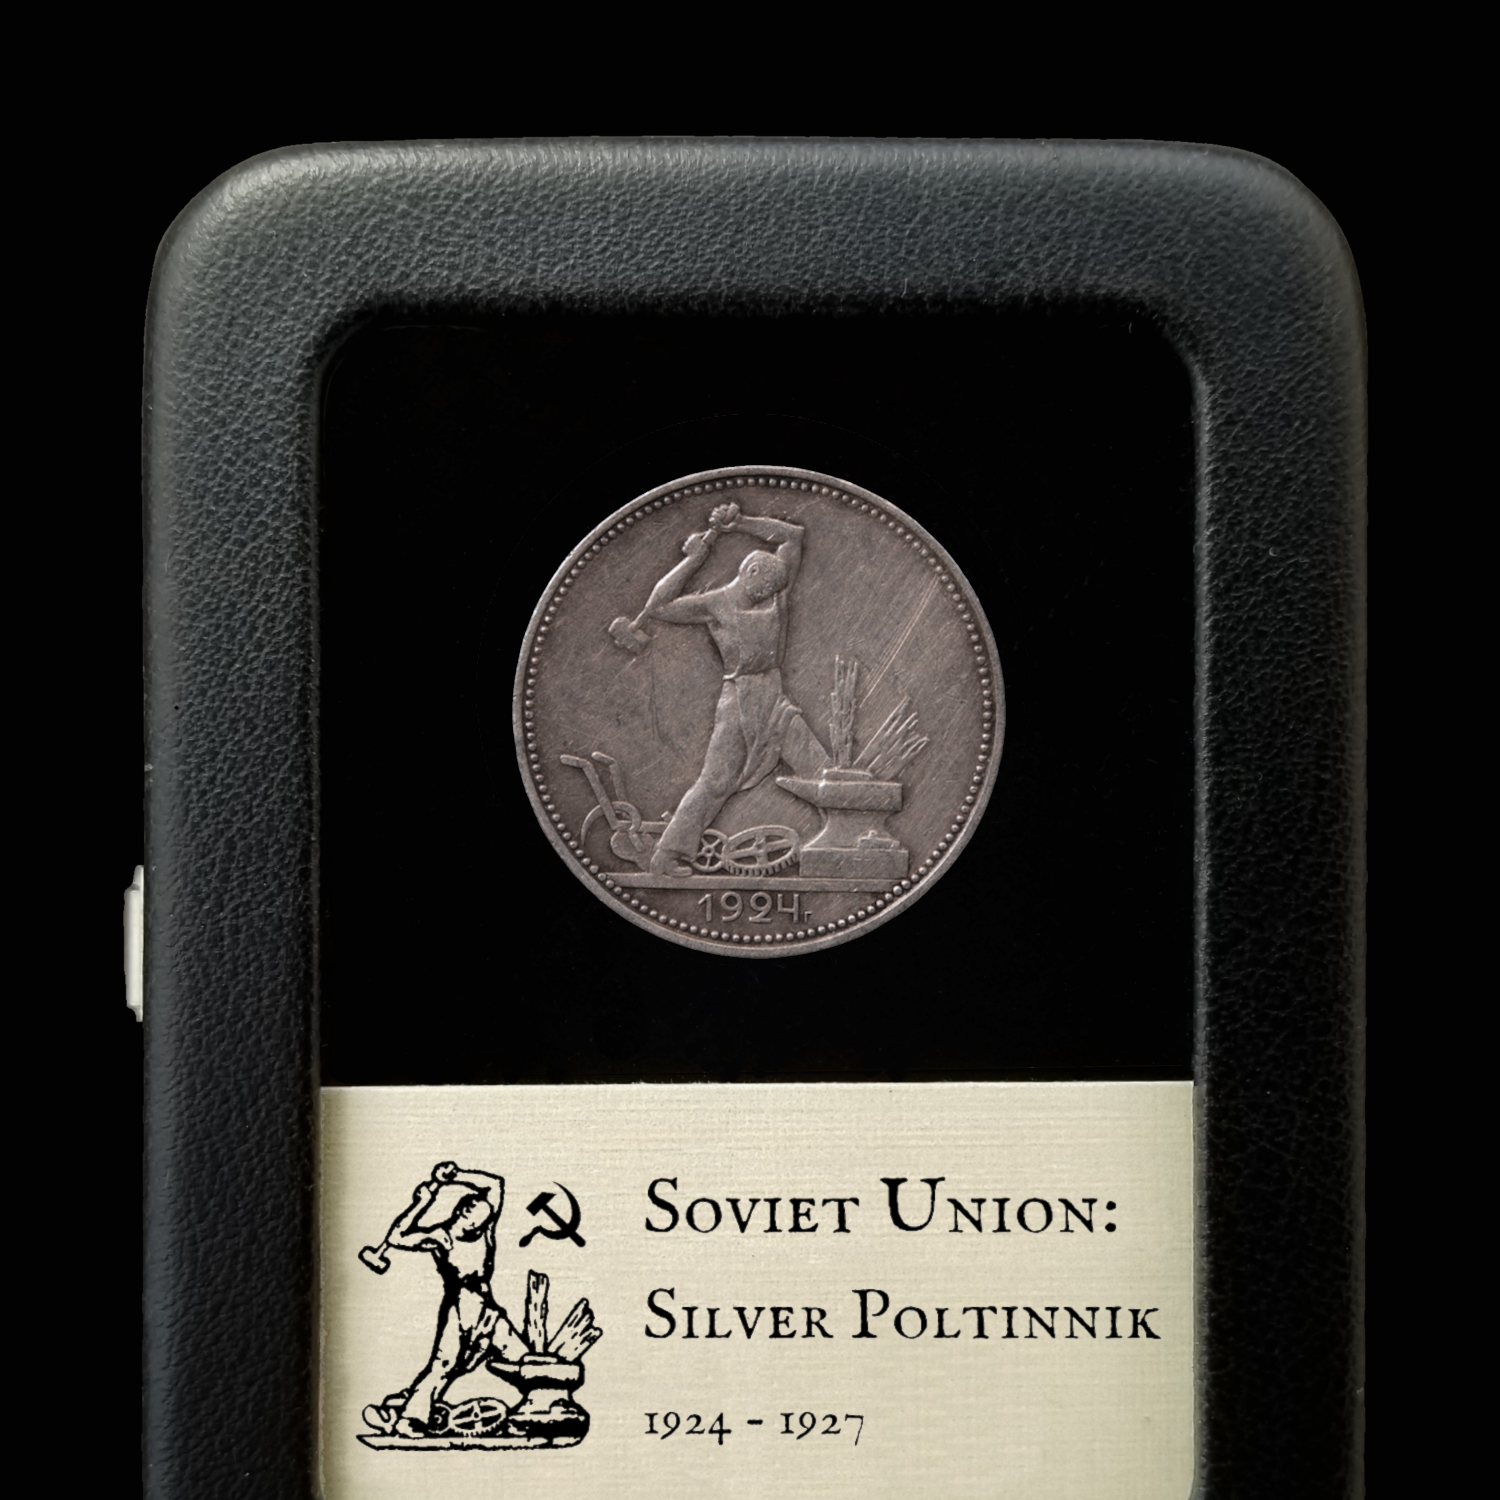 Soviet Union, Silver Poltinnik, Coins With Propaganda - 1924 to 1927 - Soviet Union (USSR)